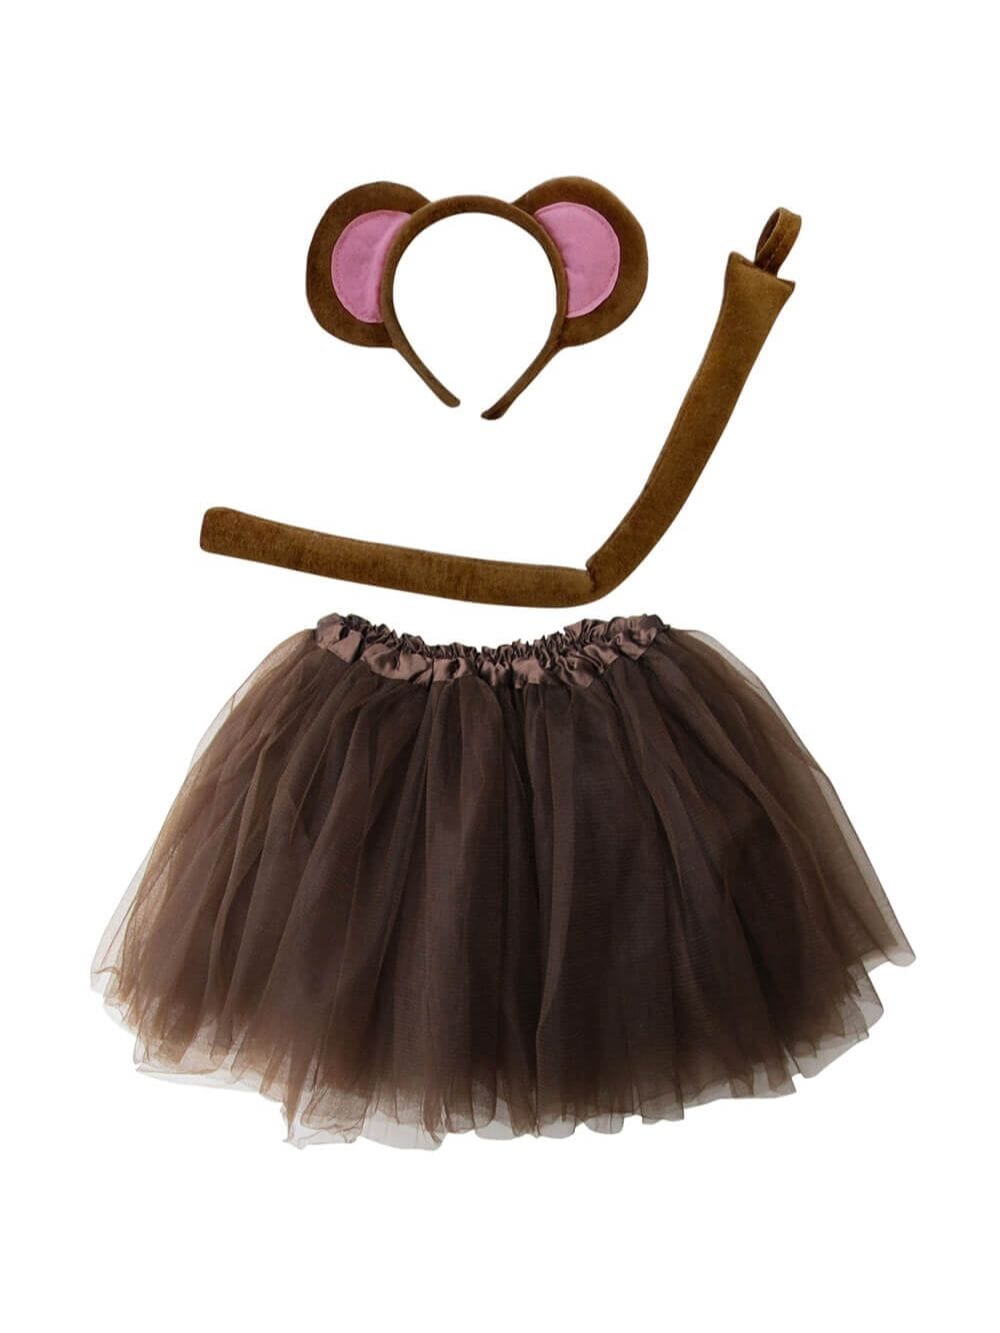 Adult Monkey Costume - Tutu Skirt, Tail, & Headband Set for Adult or Plus Size - Sydney So Sweet